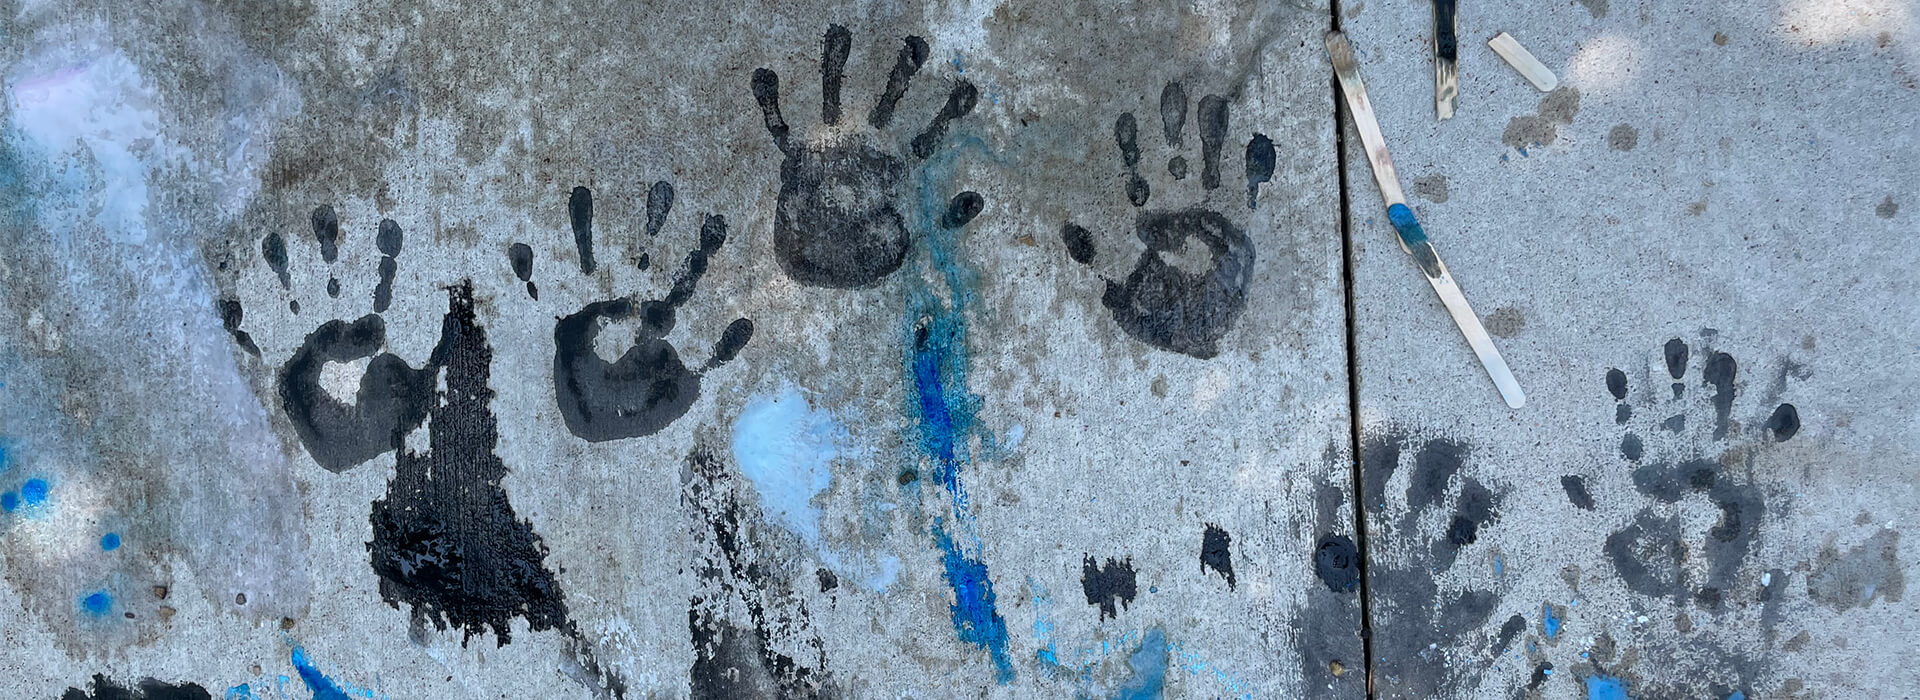 Hand prints in ice chalk on the sidewalk